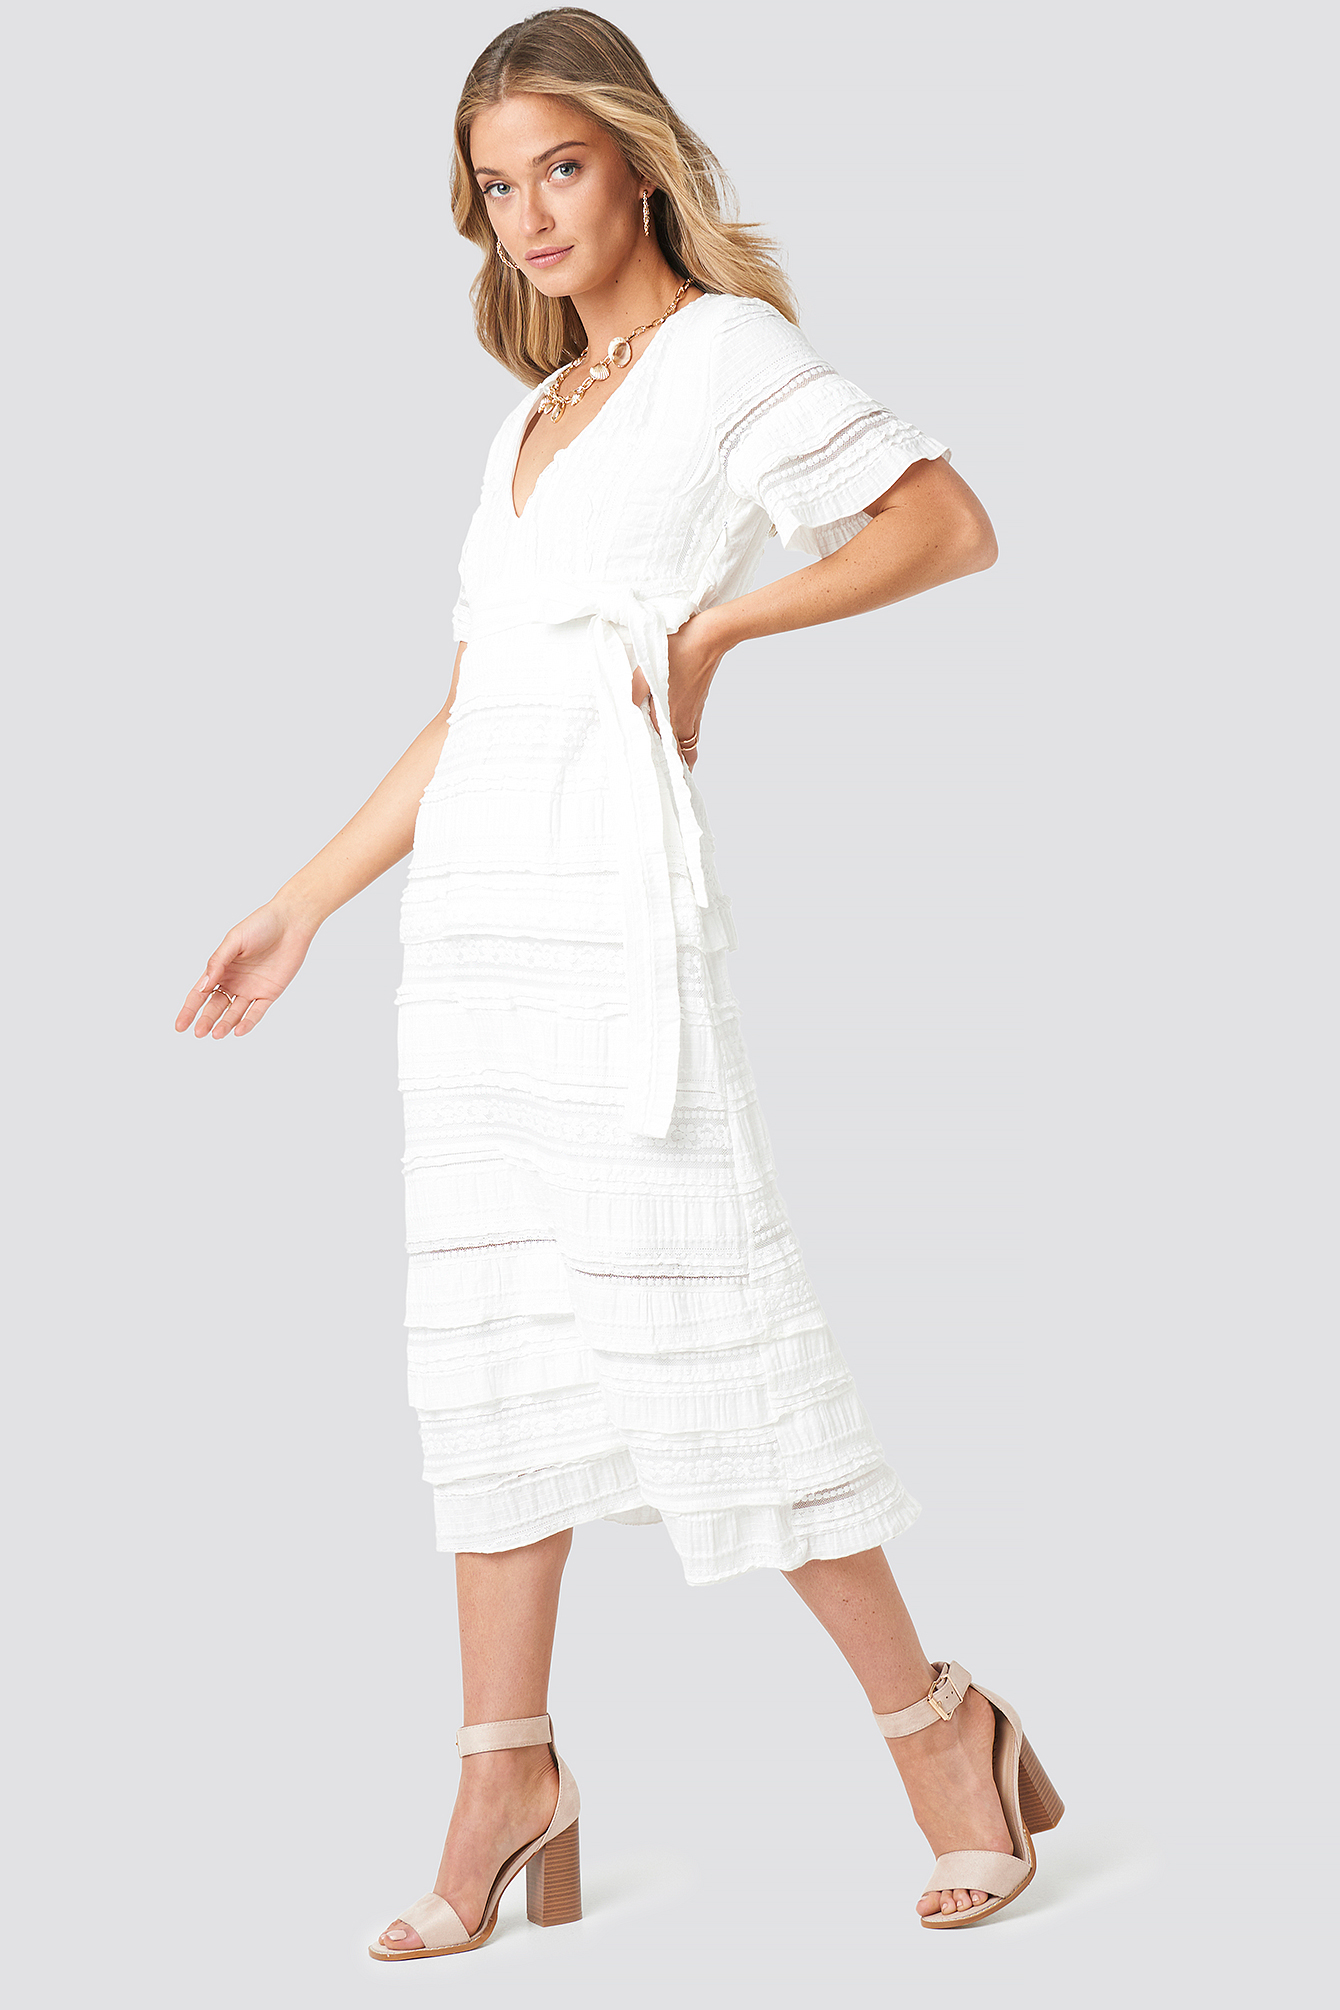 Short Sleeve V-Neck Lace Dress White ...